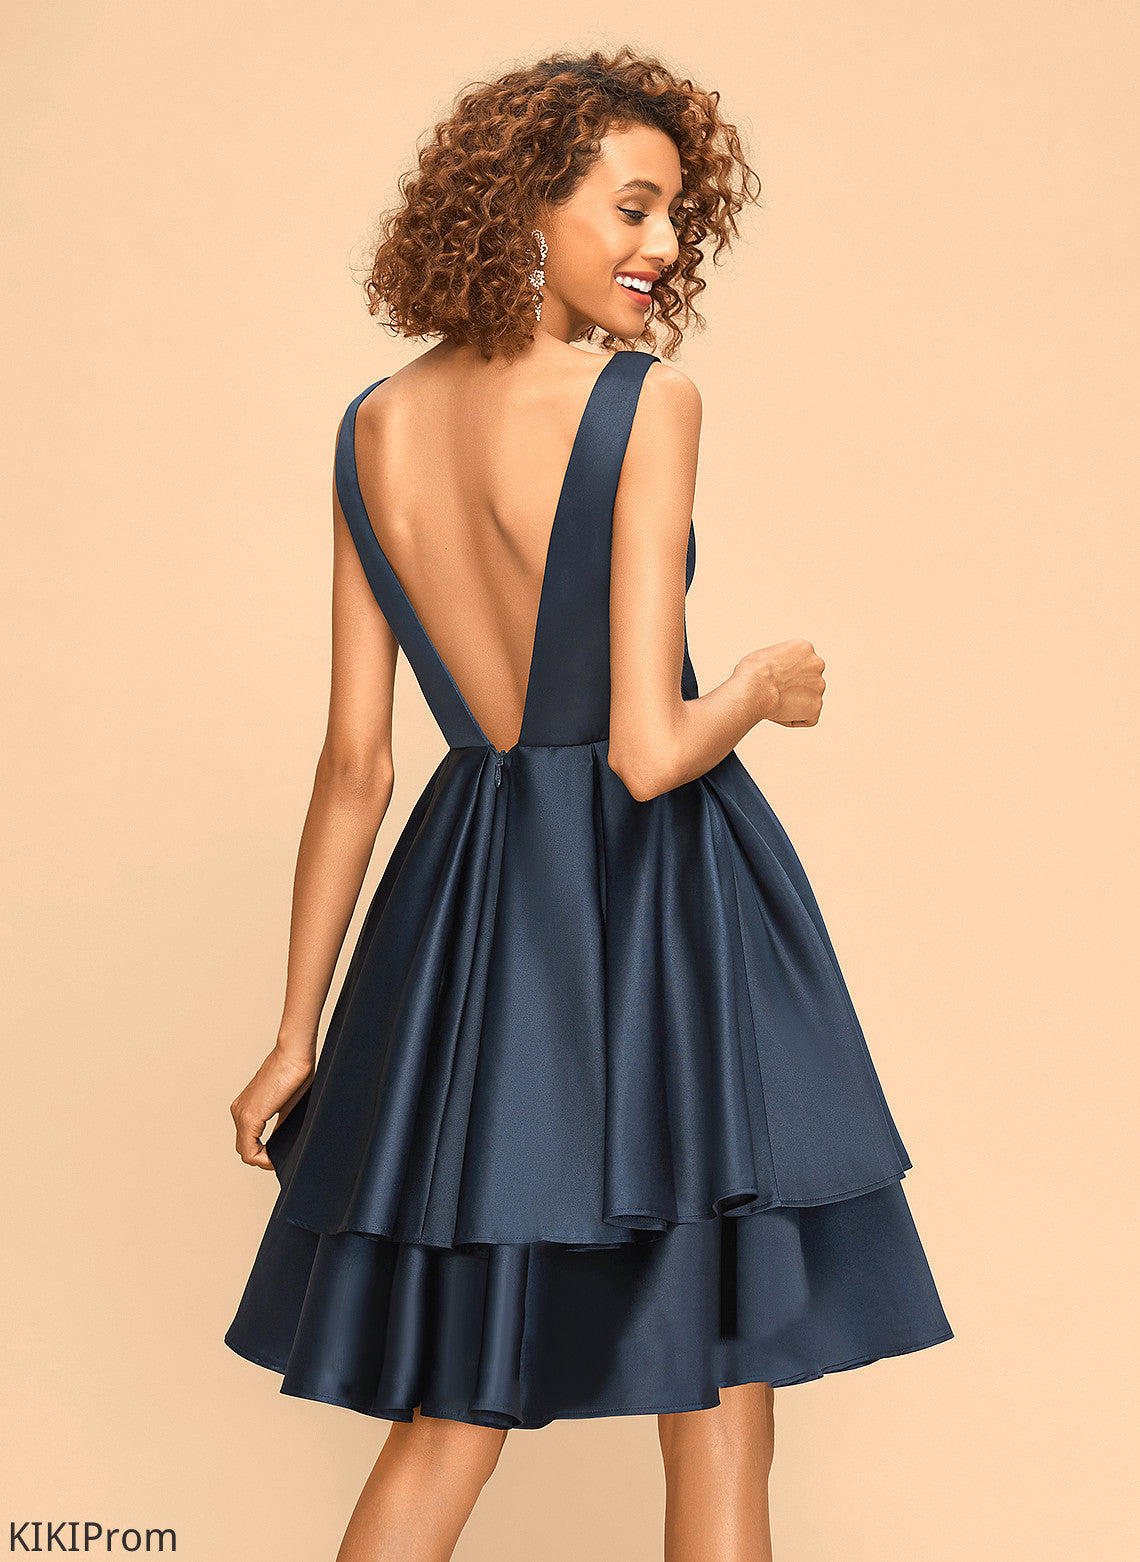 Homecoming Dresses Knee-Length Marlee V-neck Satin Dress A-Line Homecoming